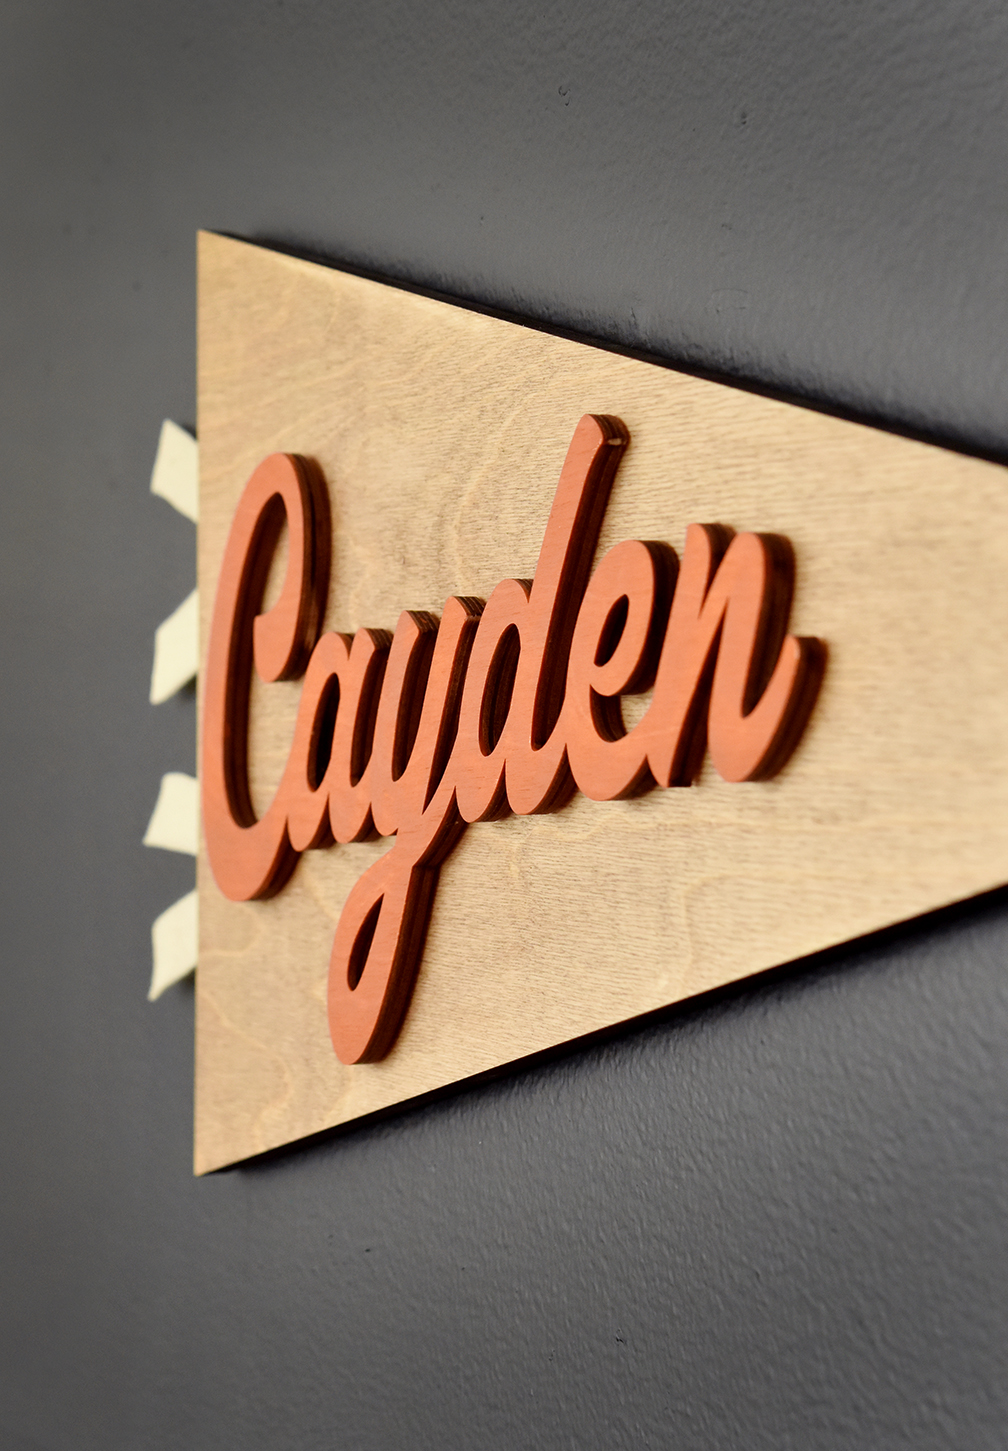 DIY Wood Pennant Name Sign /// By Design Fixation #home #decor #diy #wood #name #flag